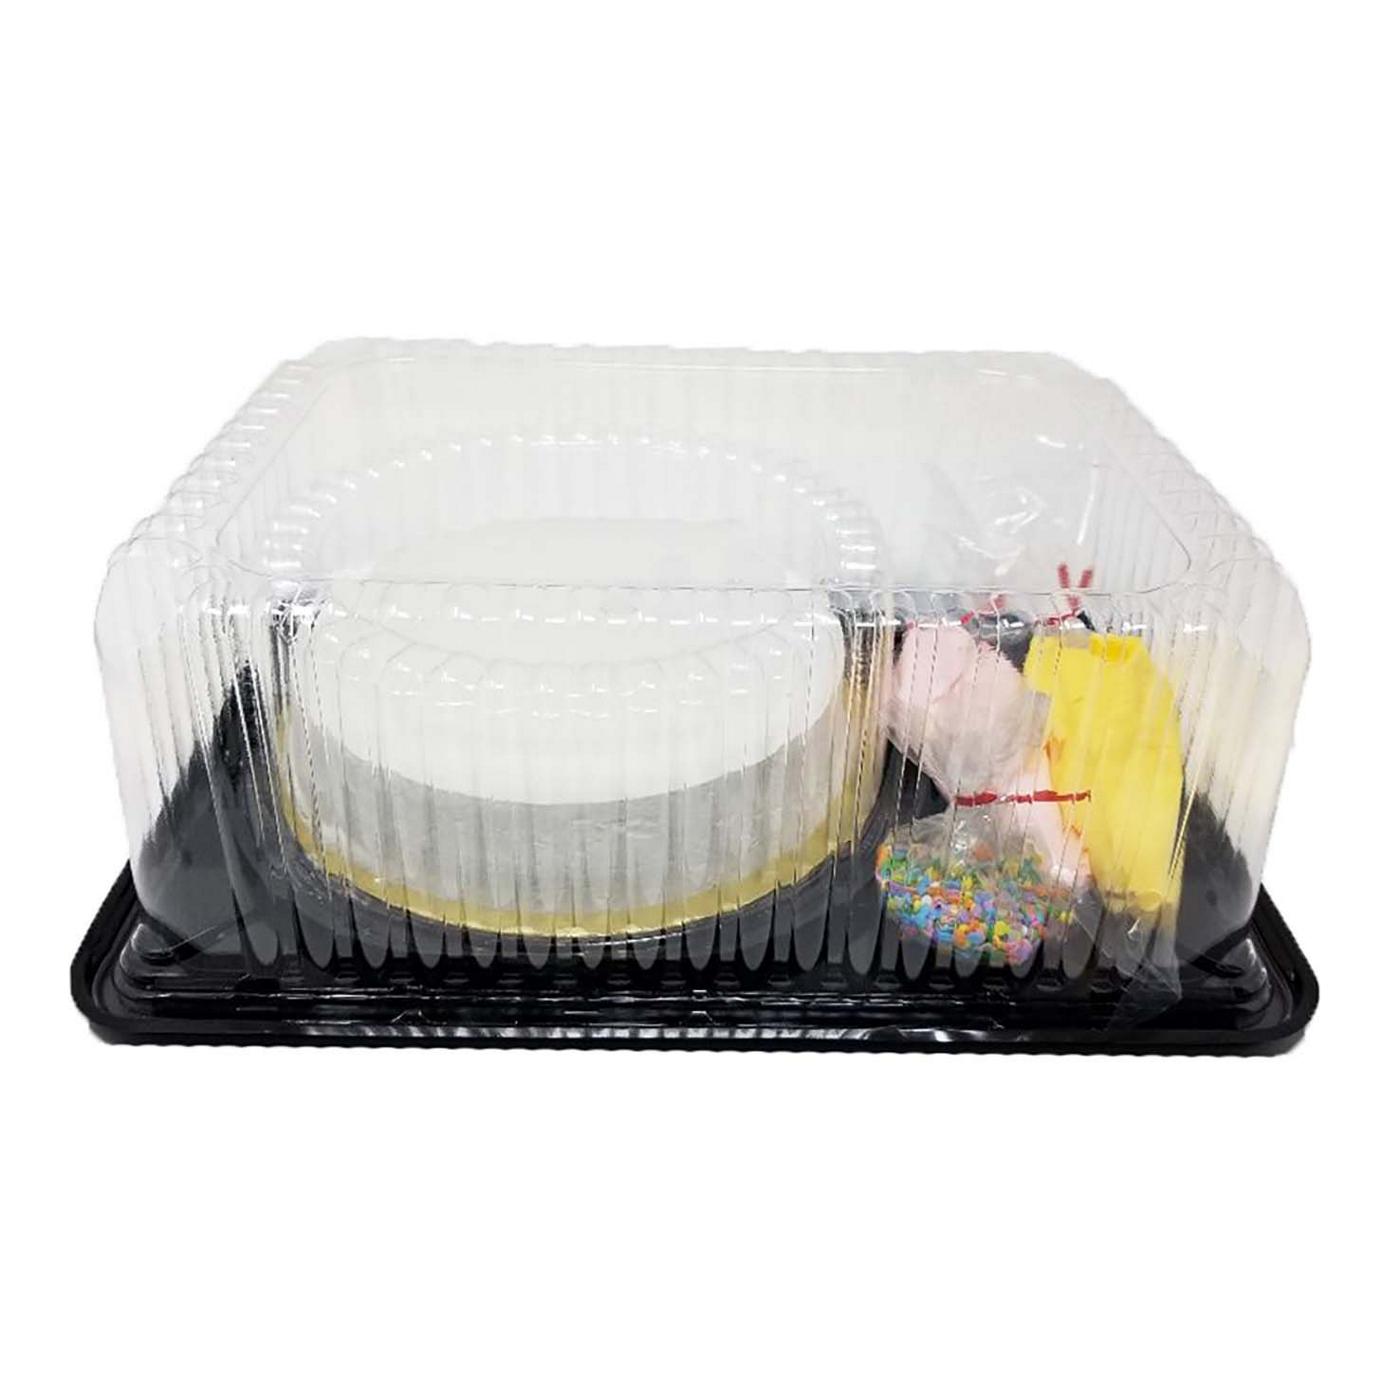 H-E-B White Cake Decorating Kit; image 2 of 2